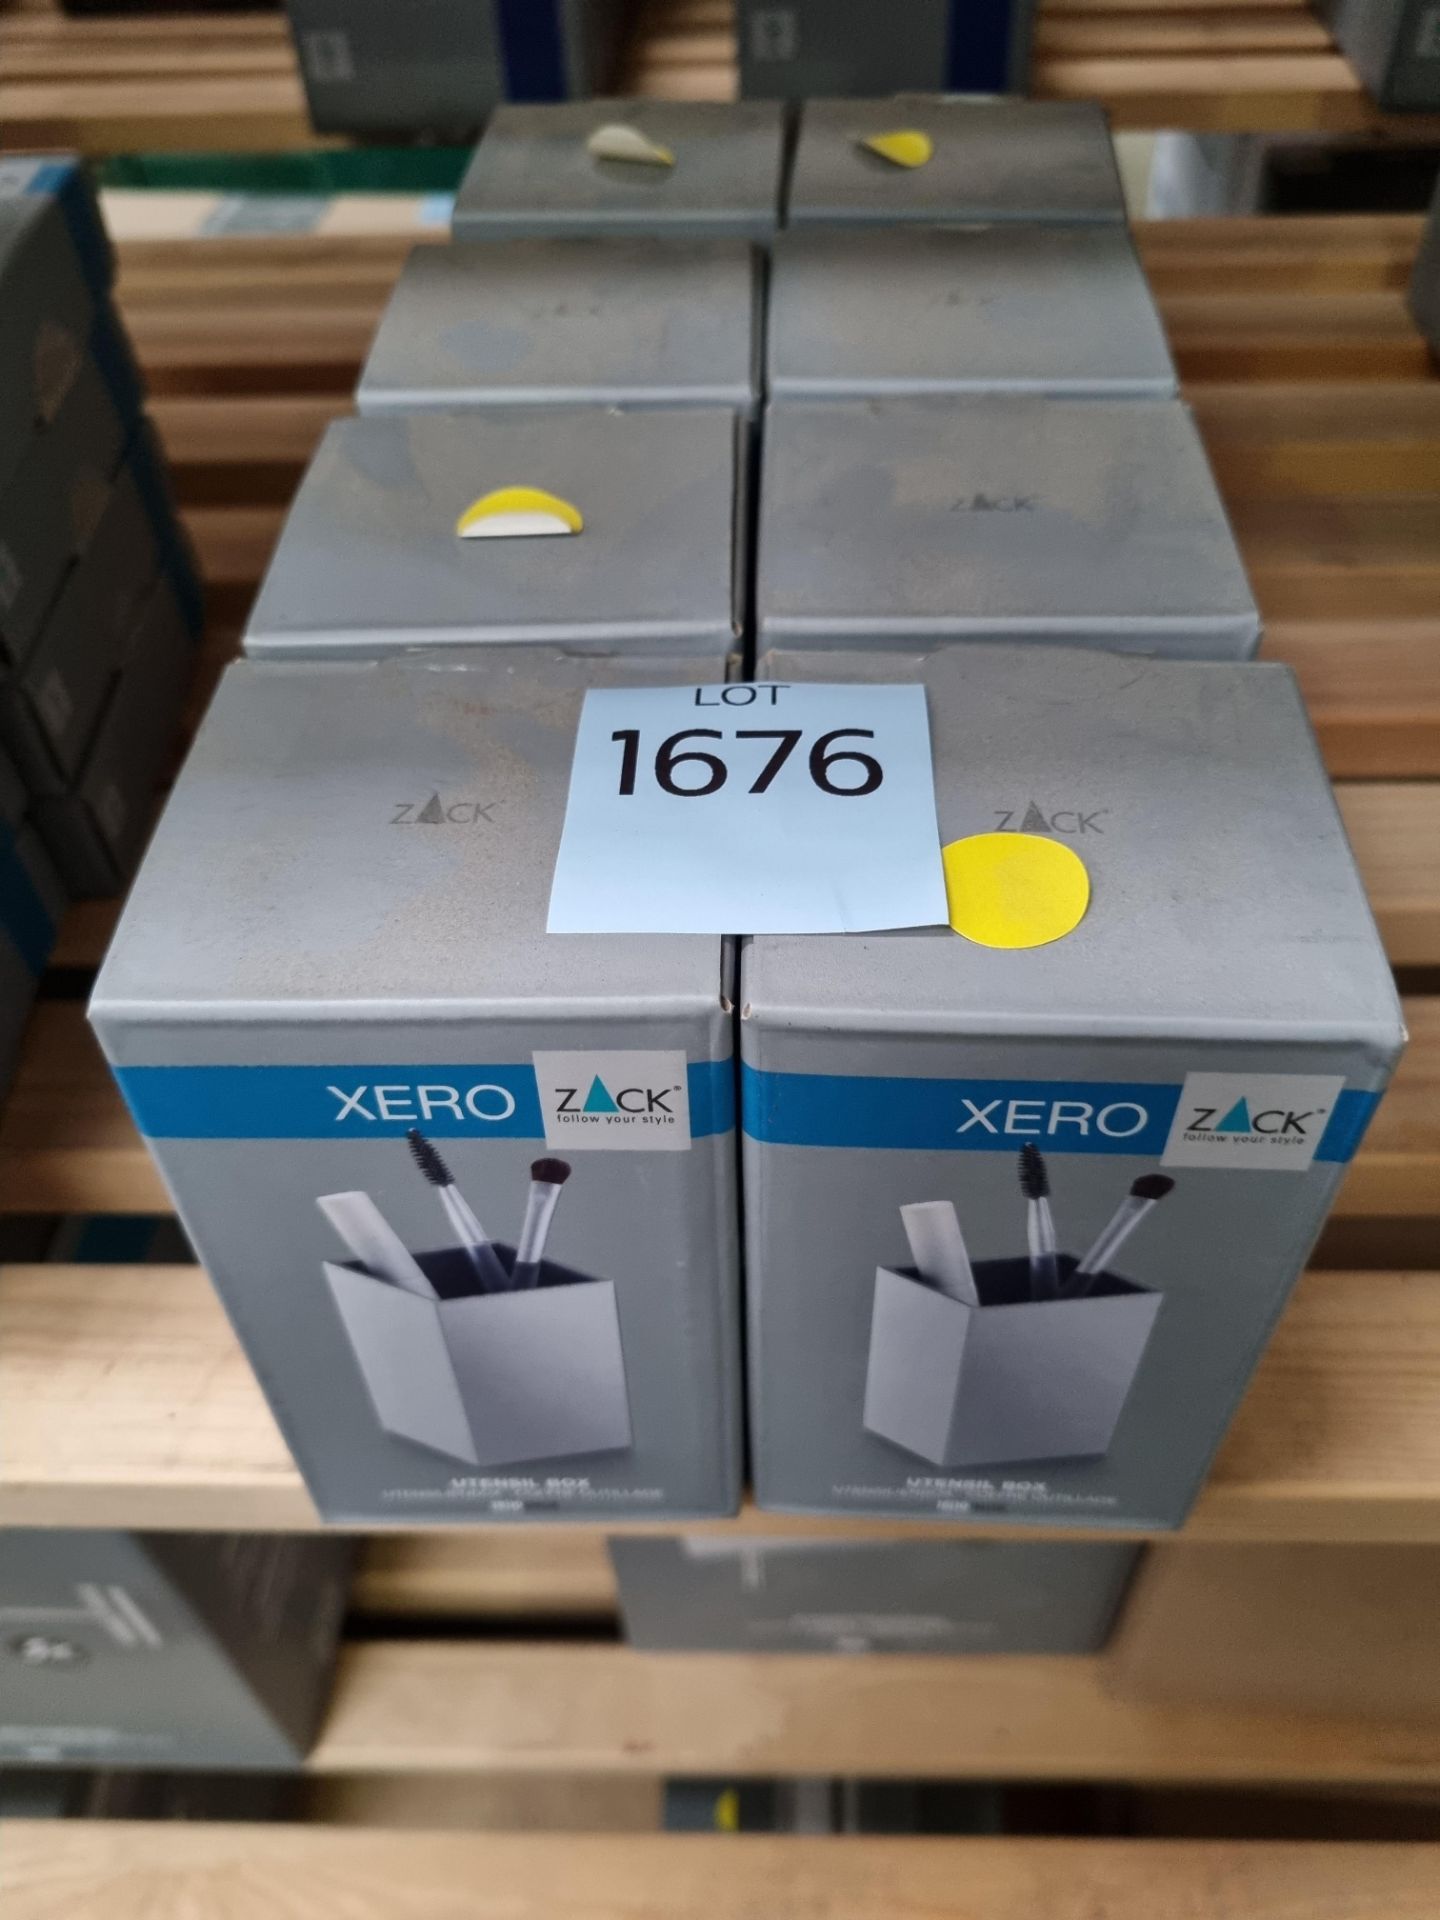 8x Zack Xero Utensil Boxes